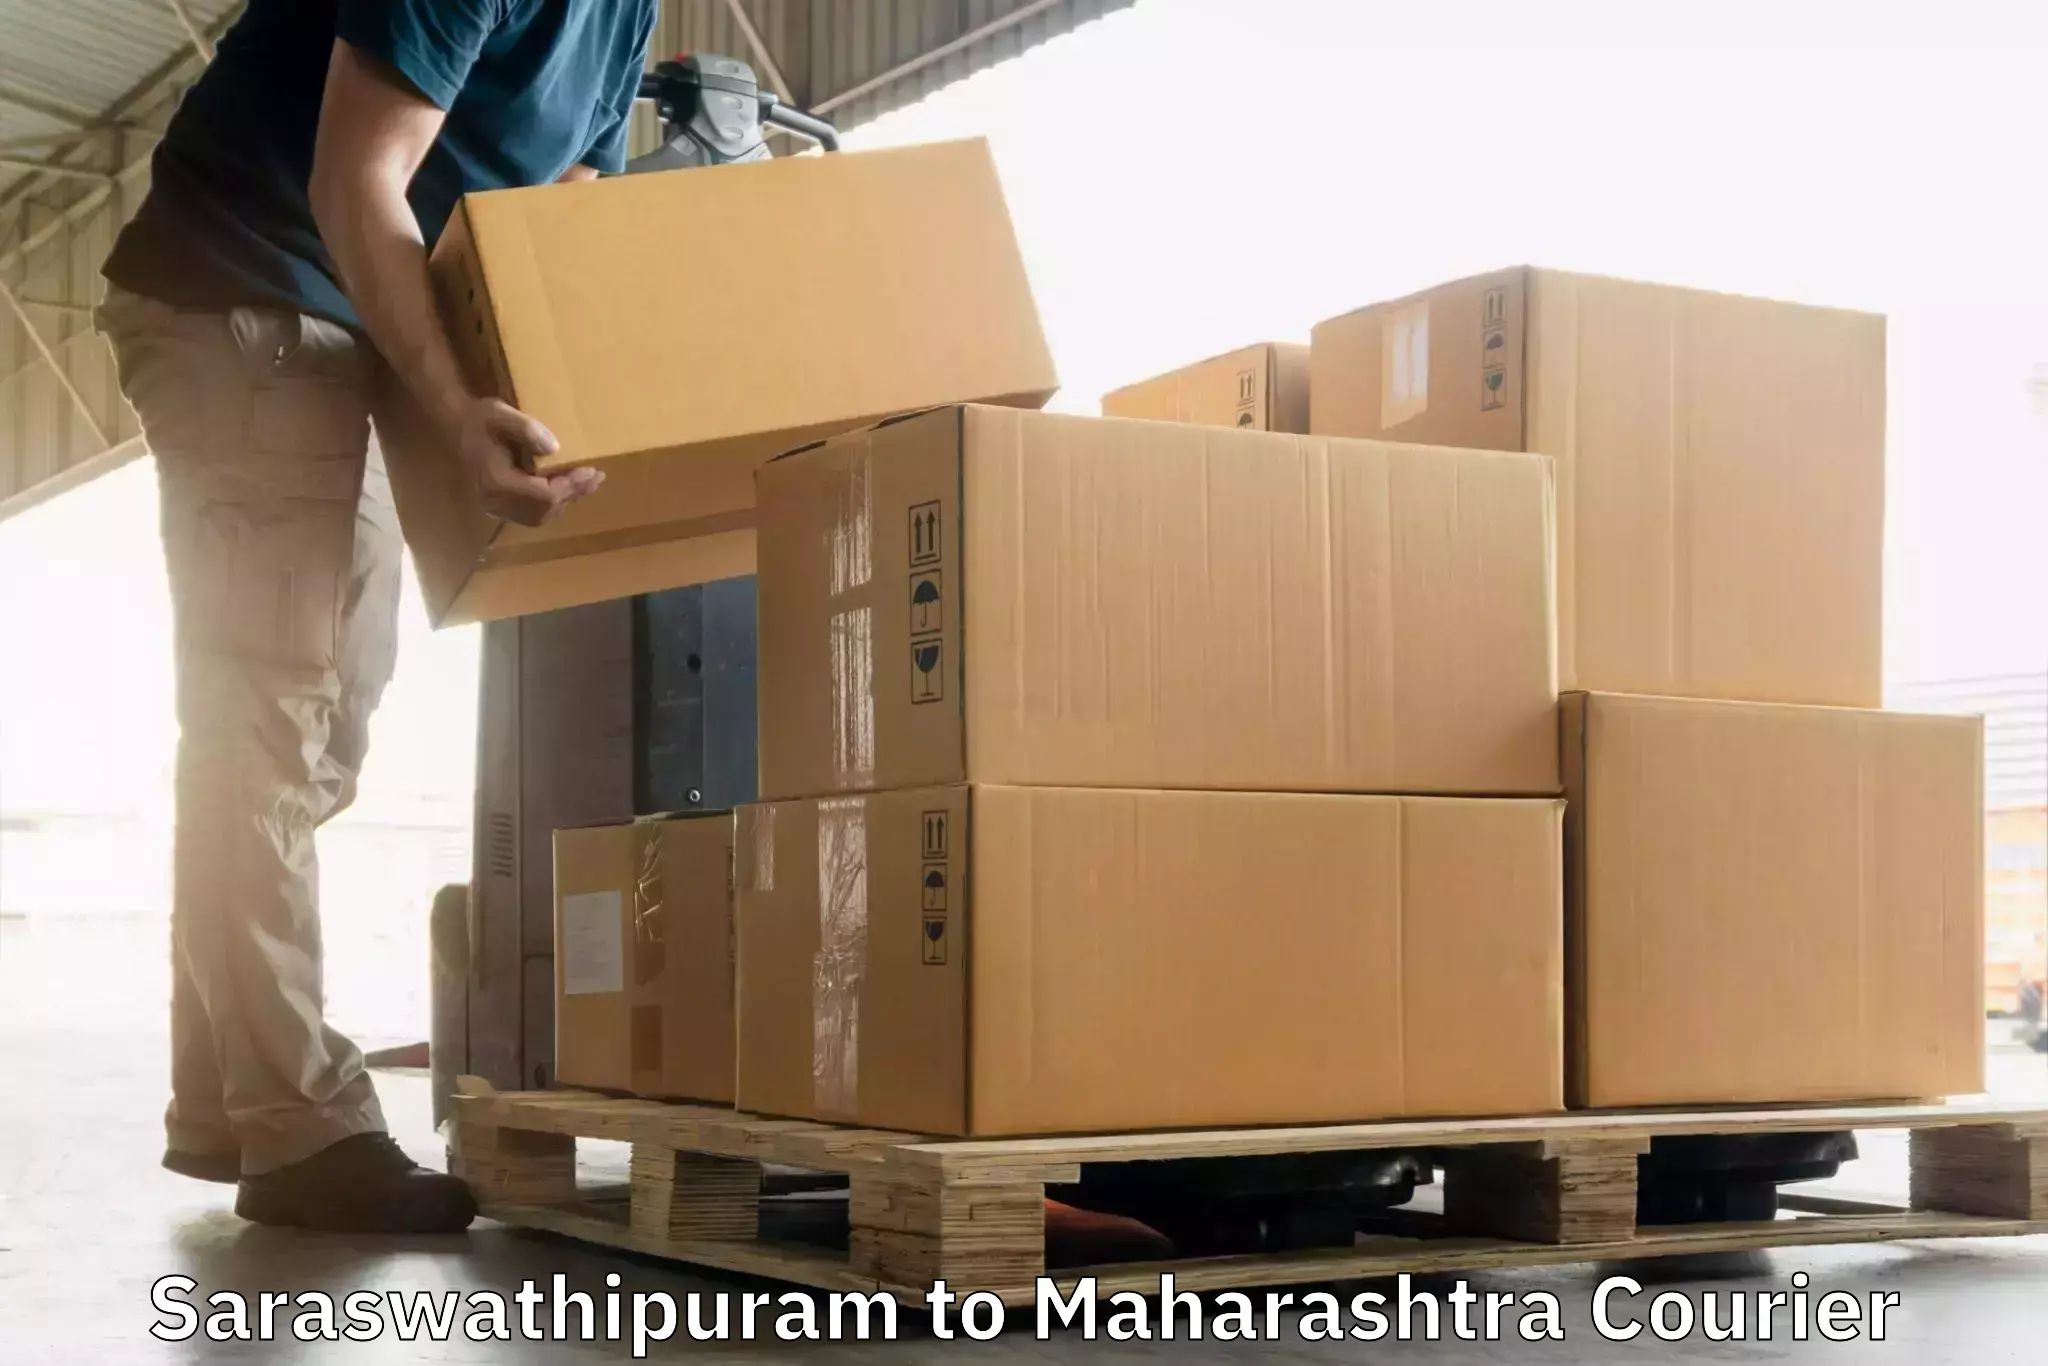 Express package delivery in Saraswathipuram to Koregaon